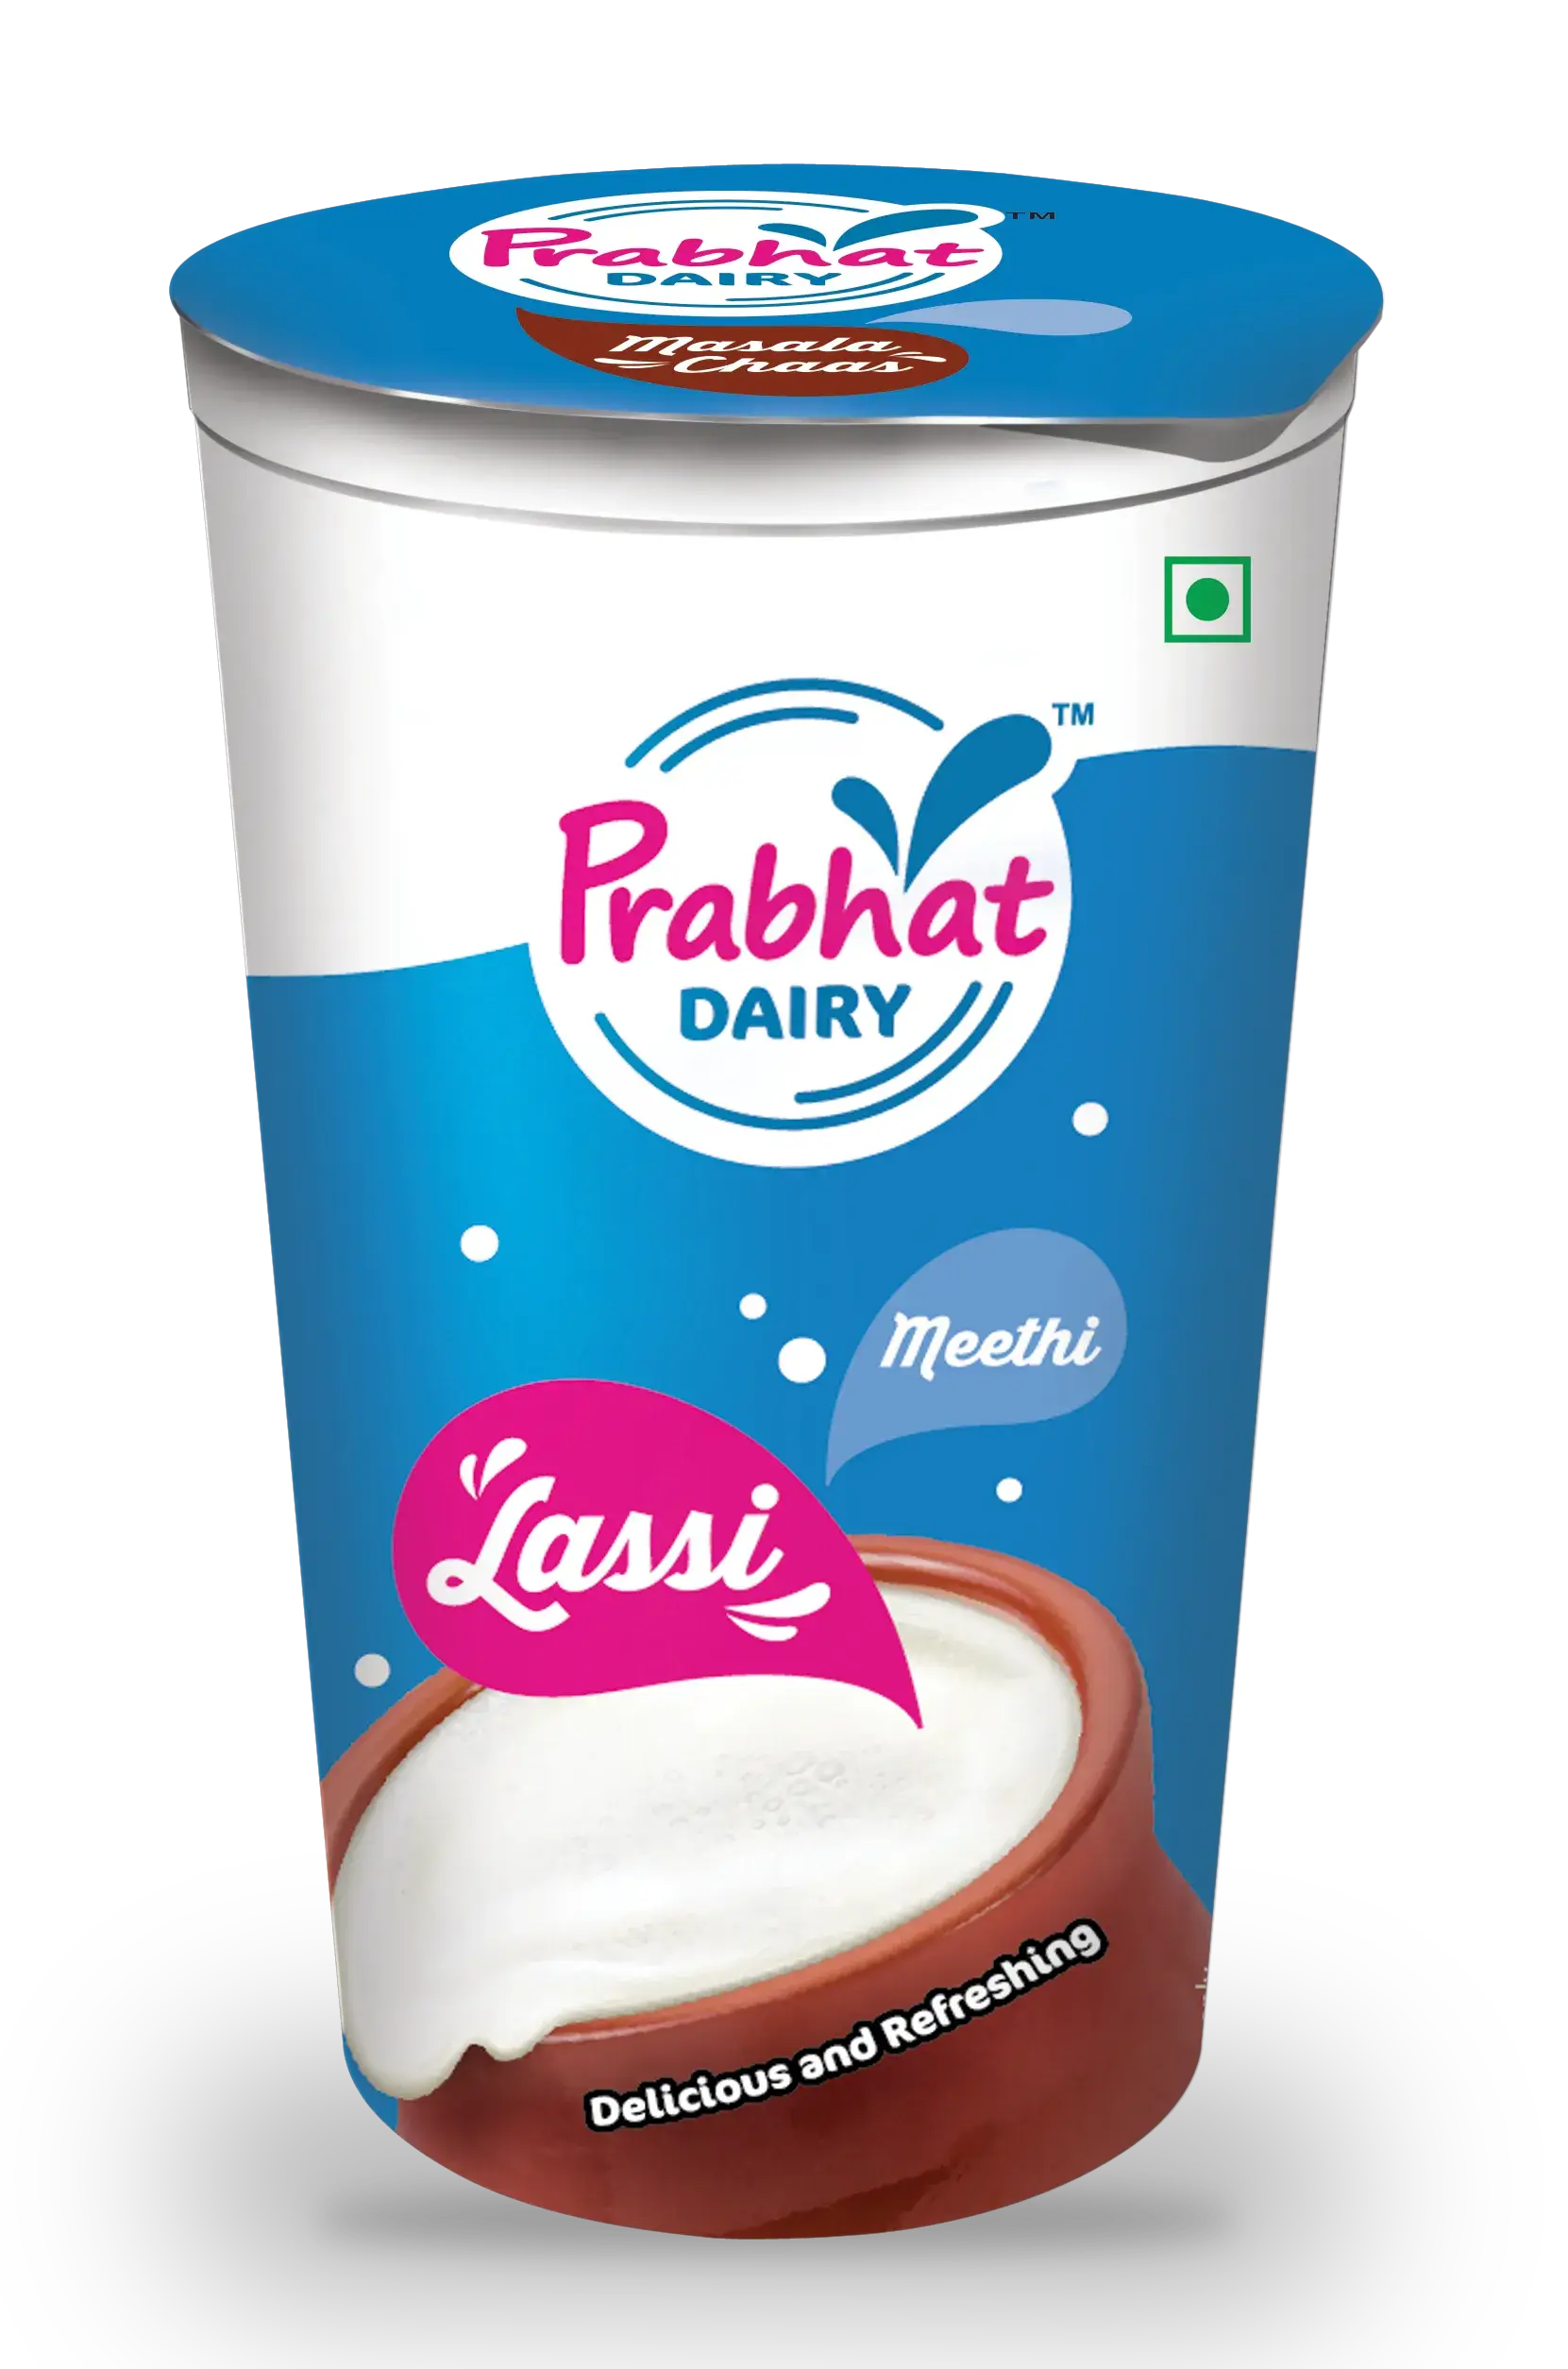 Prabhat Dairy Meethi Lassi Cup 180ml